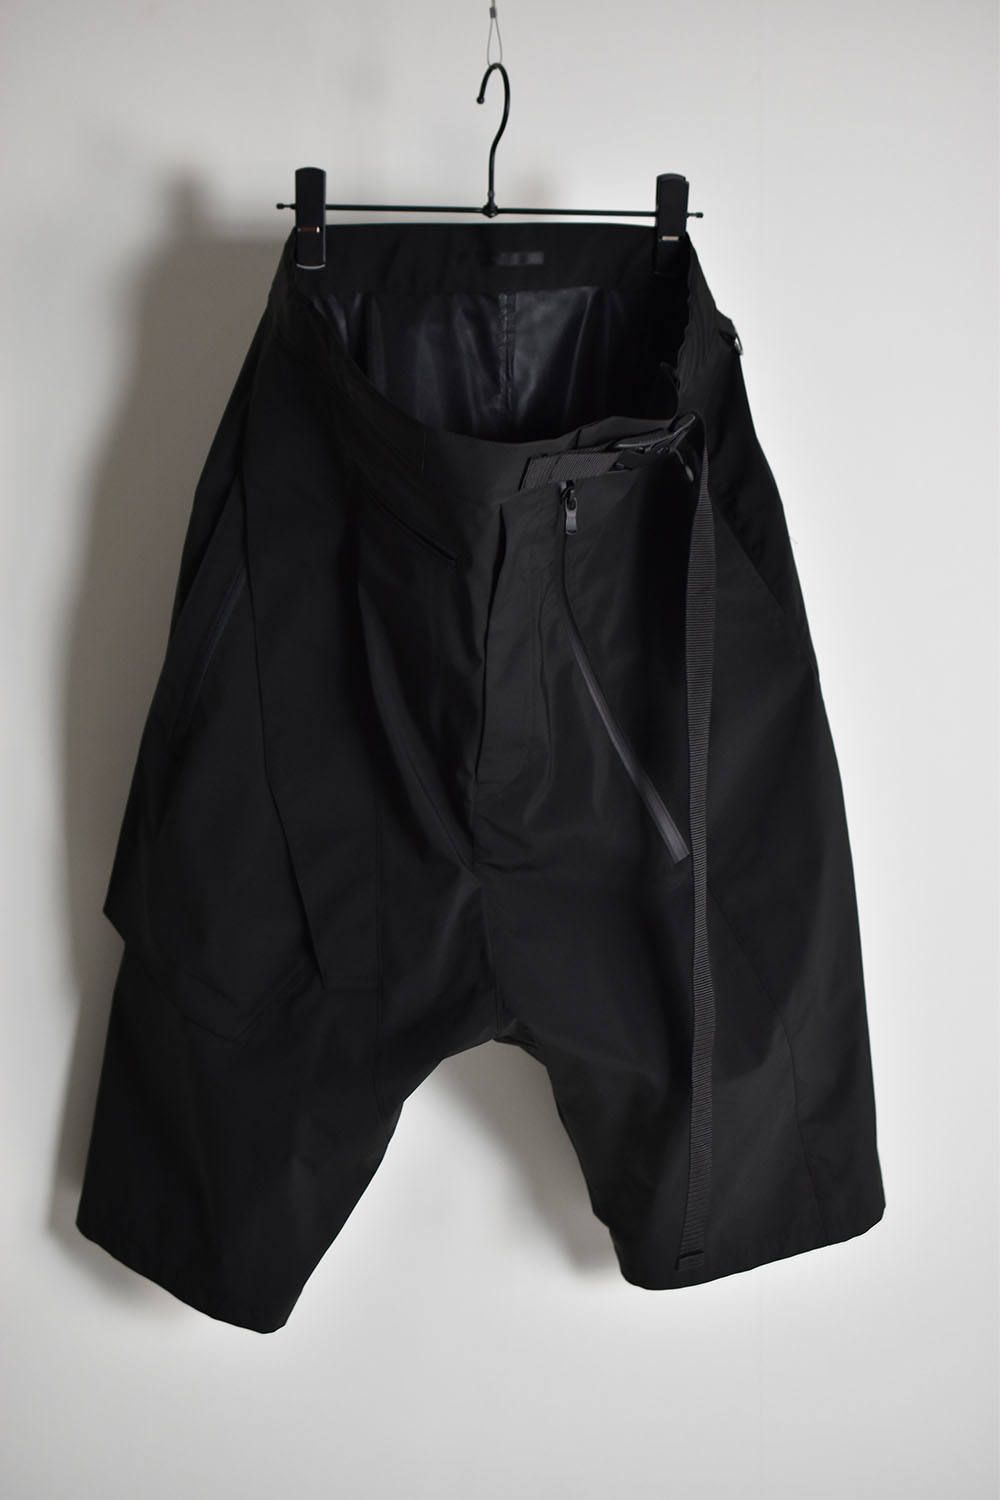 Olmetex 7length Pants"Black" / オルメテックス7分丈パンツ"ブラック"